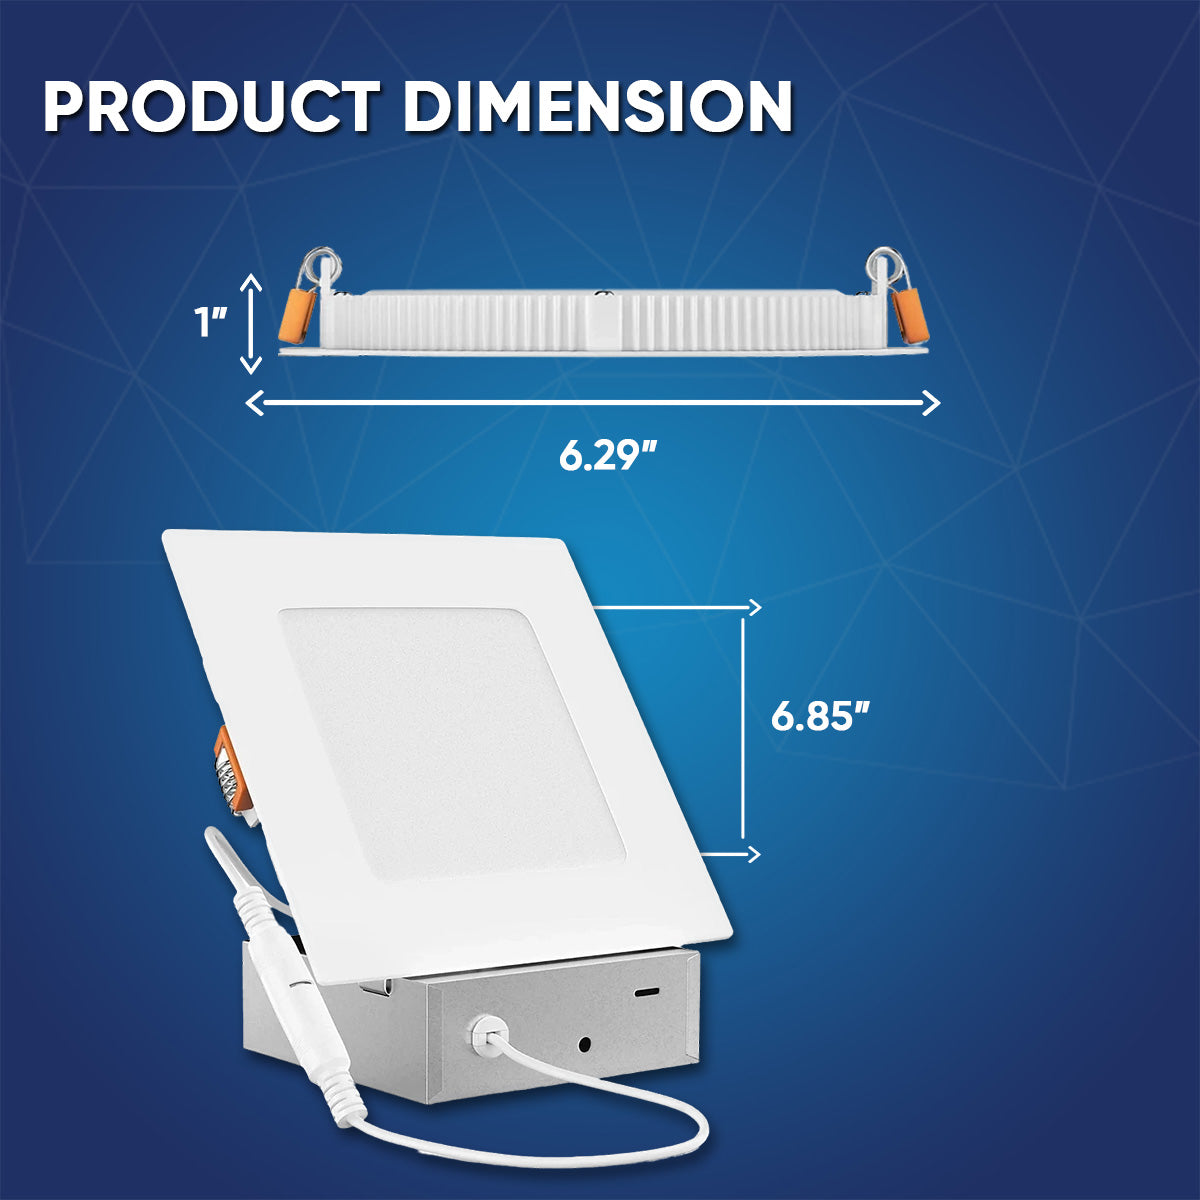 LED Slim Ceiling Light- Product Dimension